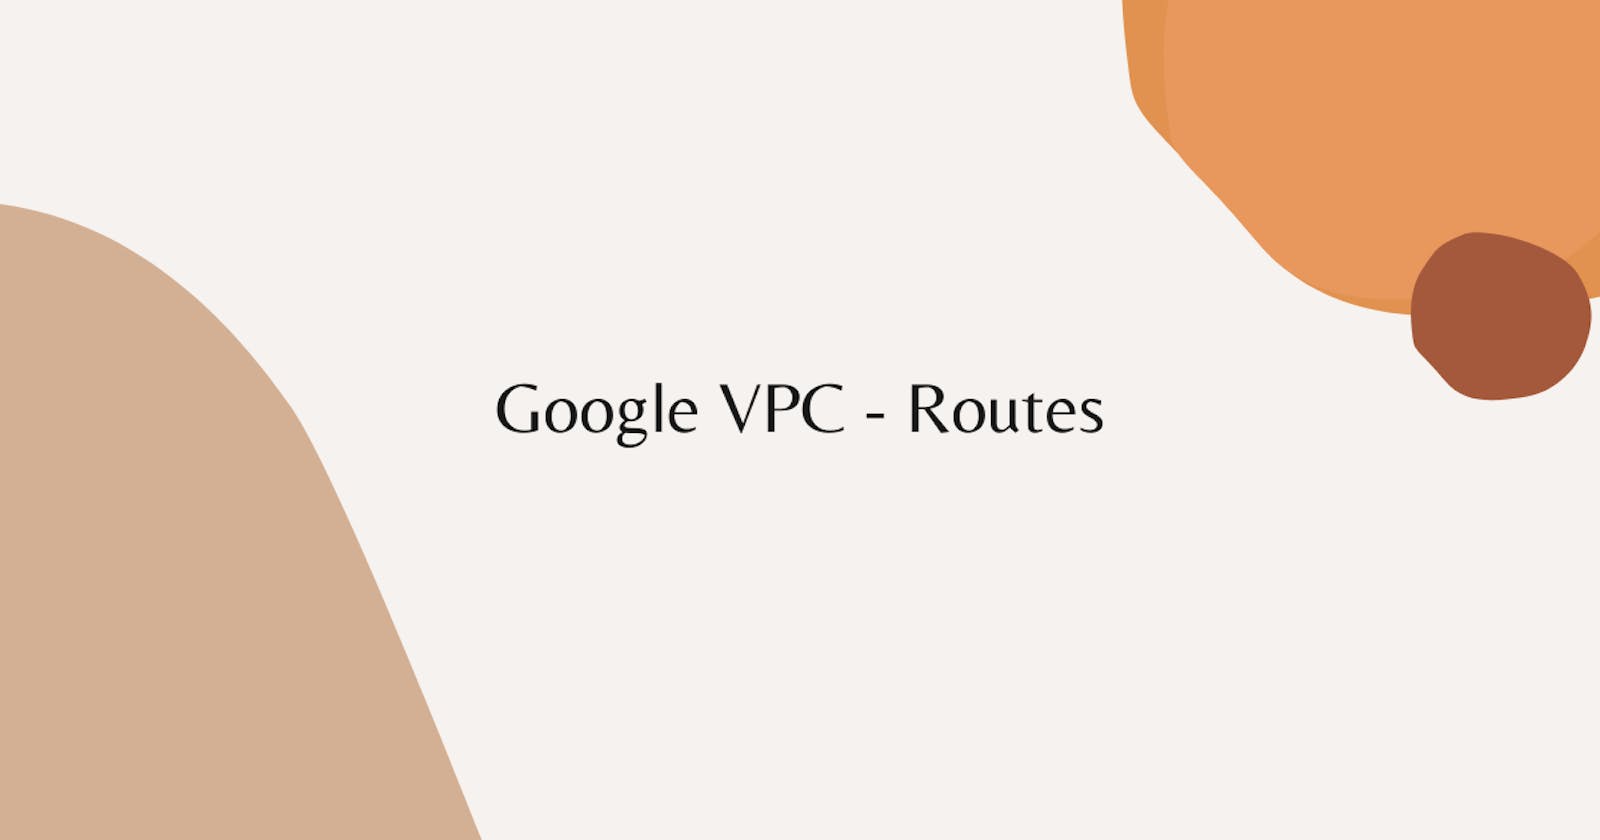 Google VPC - Routes